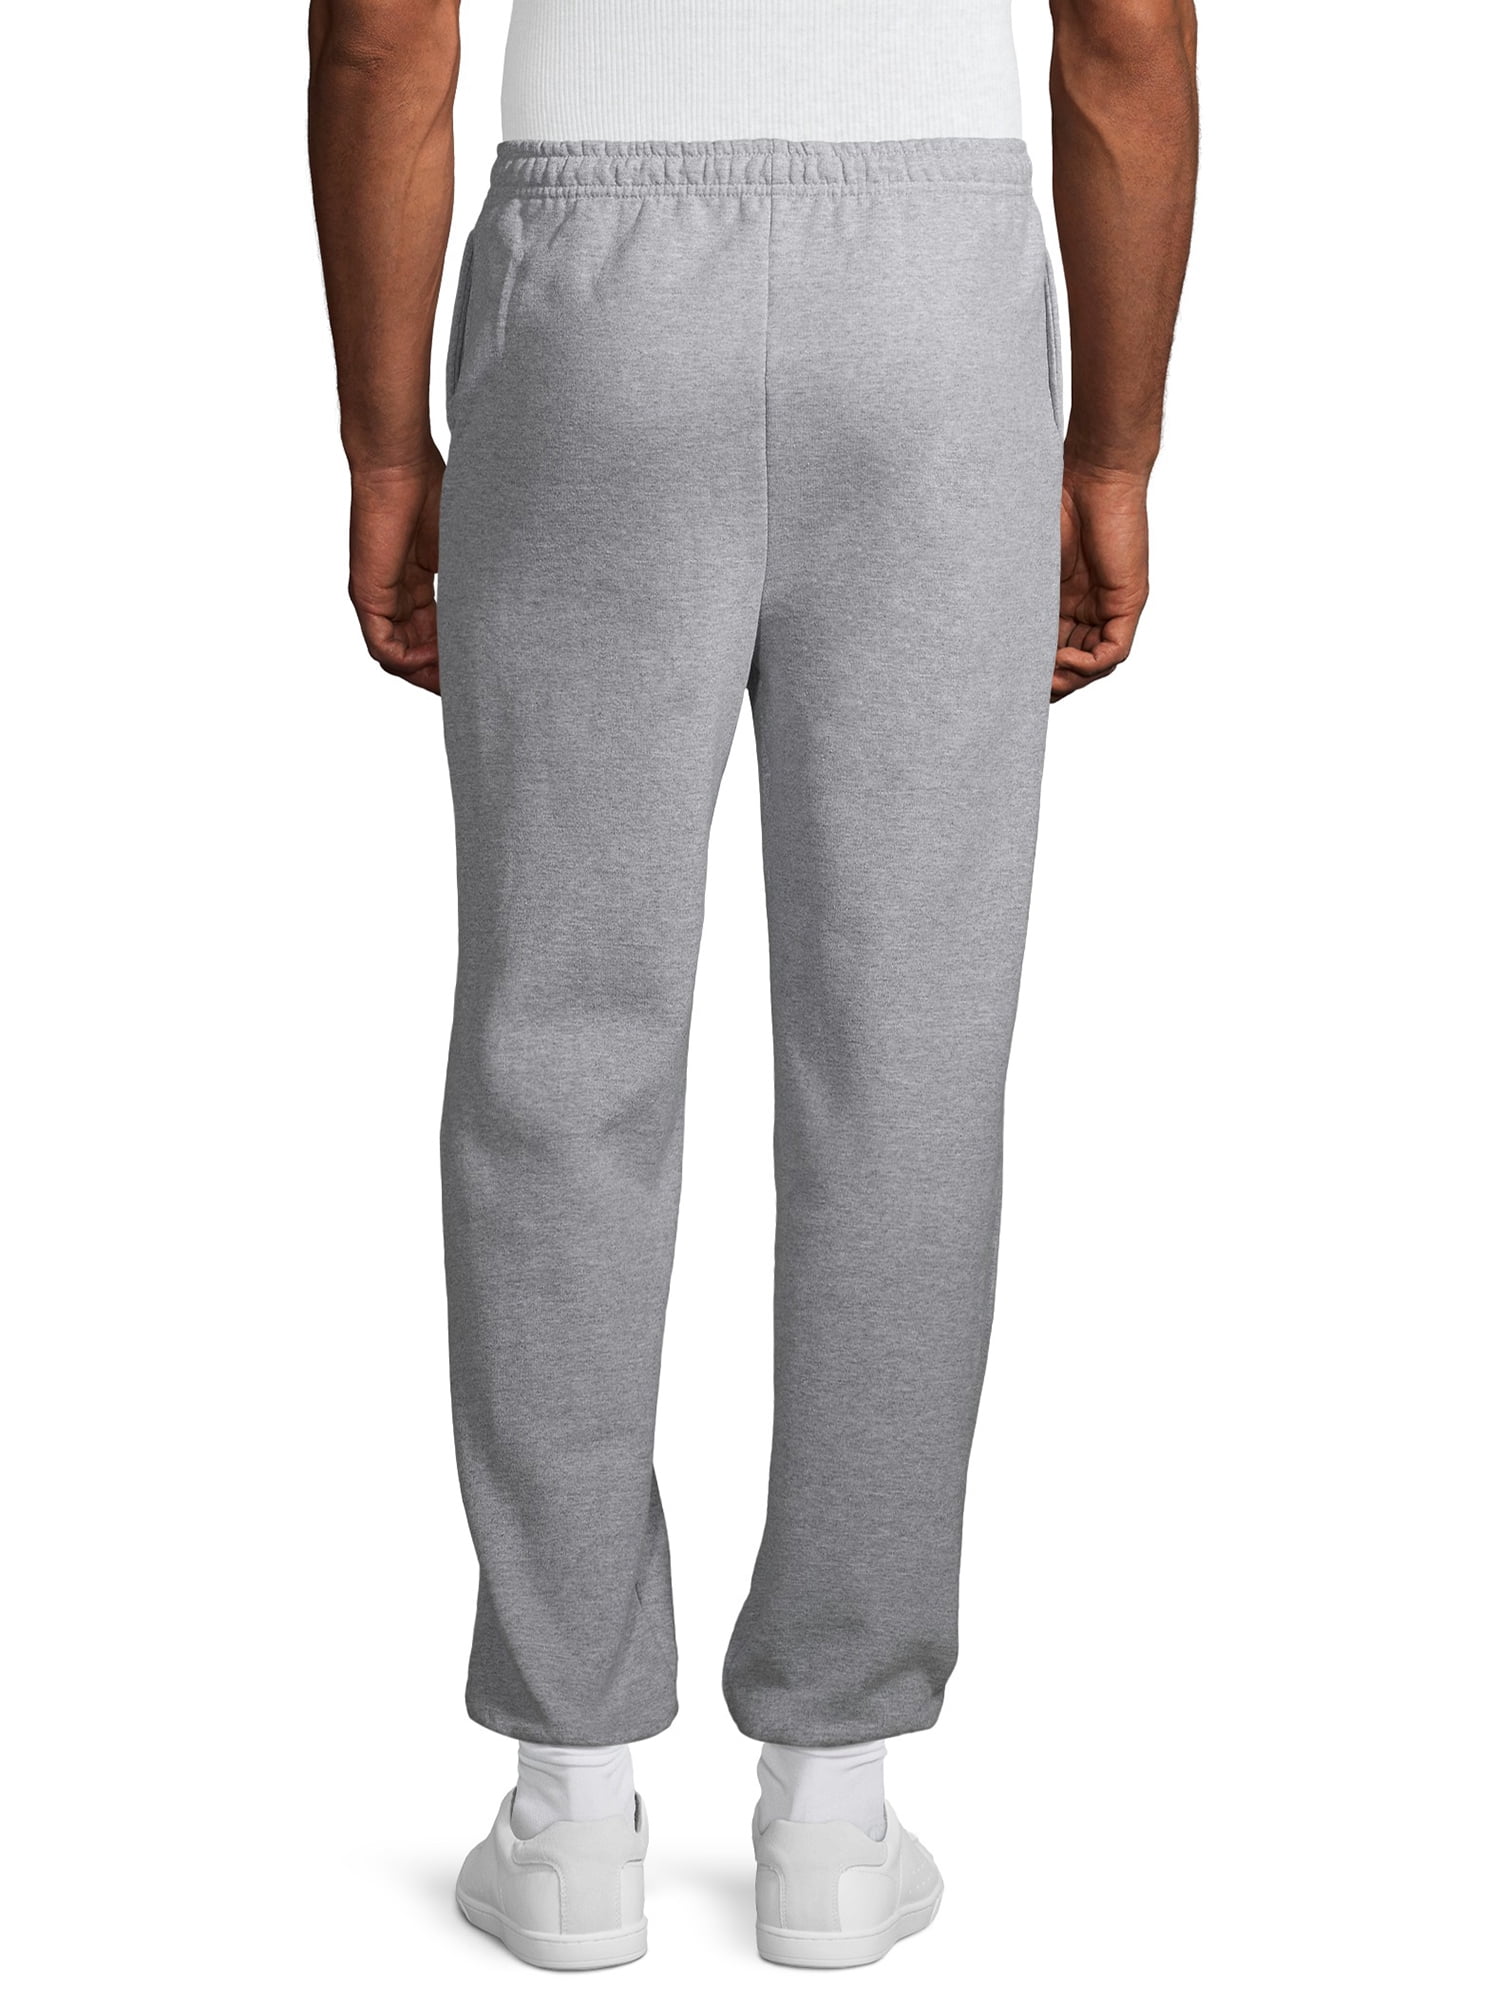 GetUSCart- Gildan Men's Fleece Open Bottom Pocketed Pant, Navy, Large